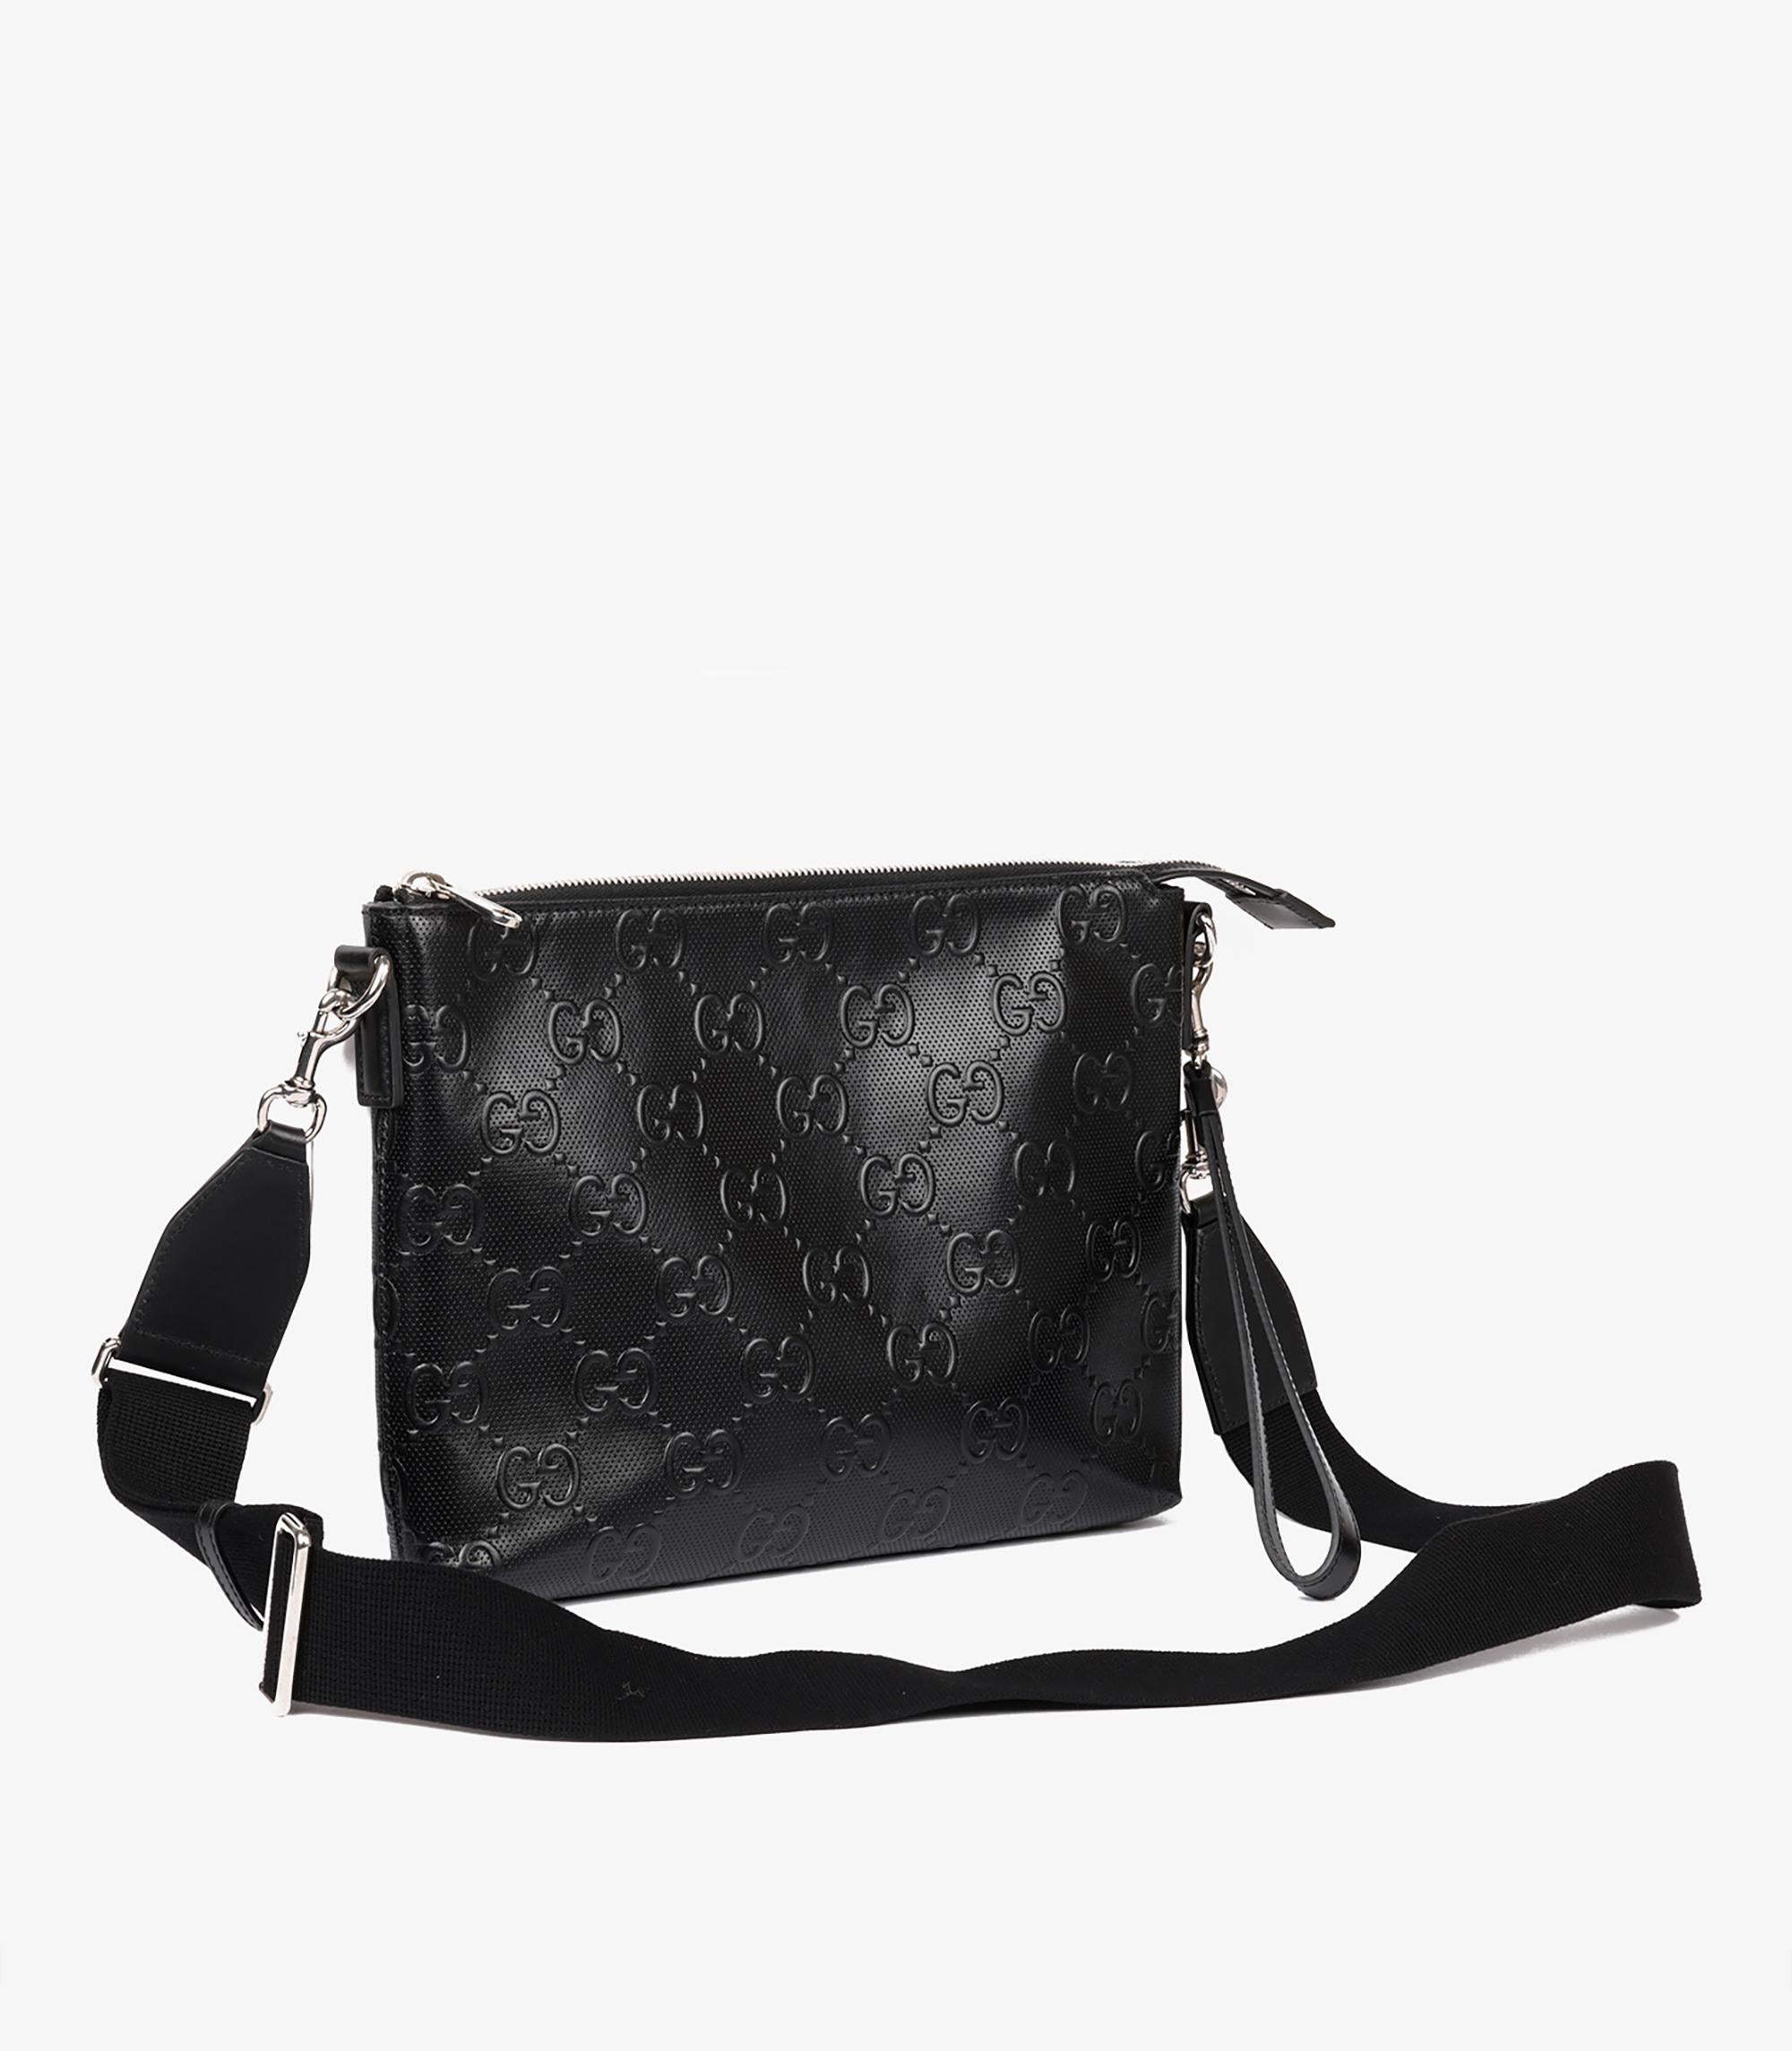 Gucci GG Black Embossed Leather Medium Messenger Bag In Excellent Condition For Sale In Bishop's Stortford, Hertfordshire